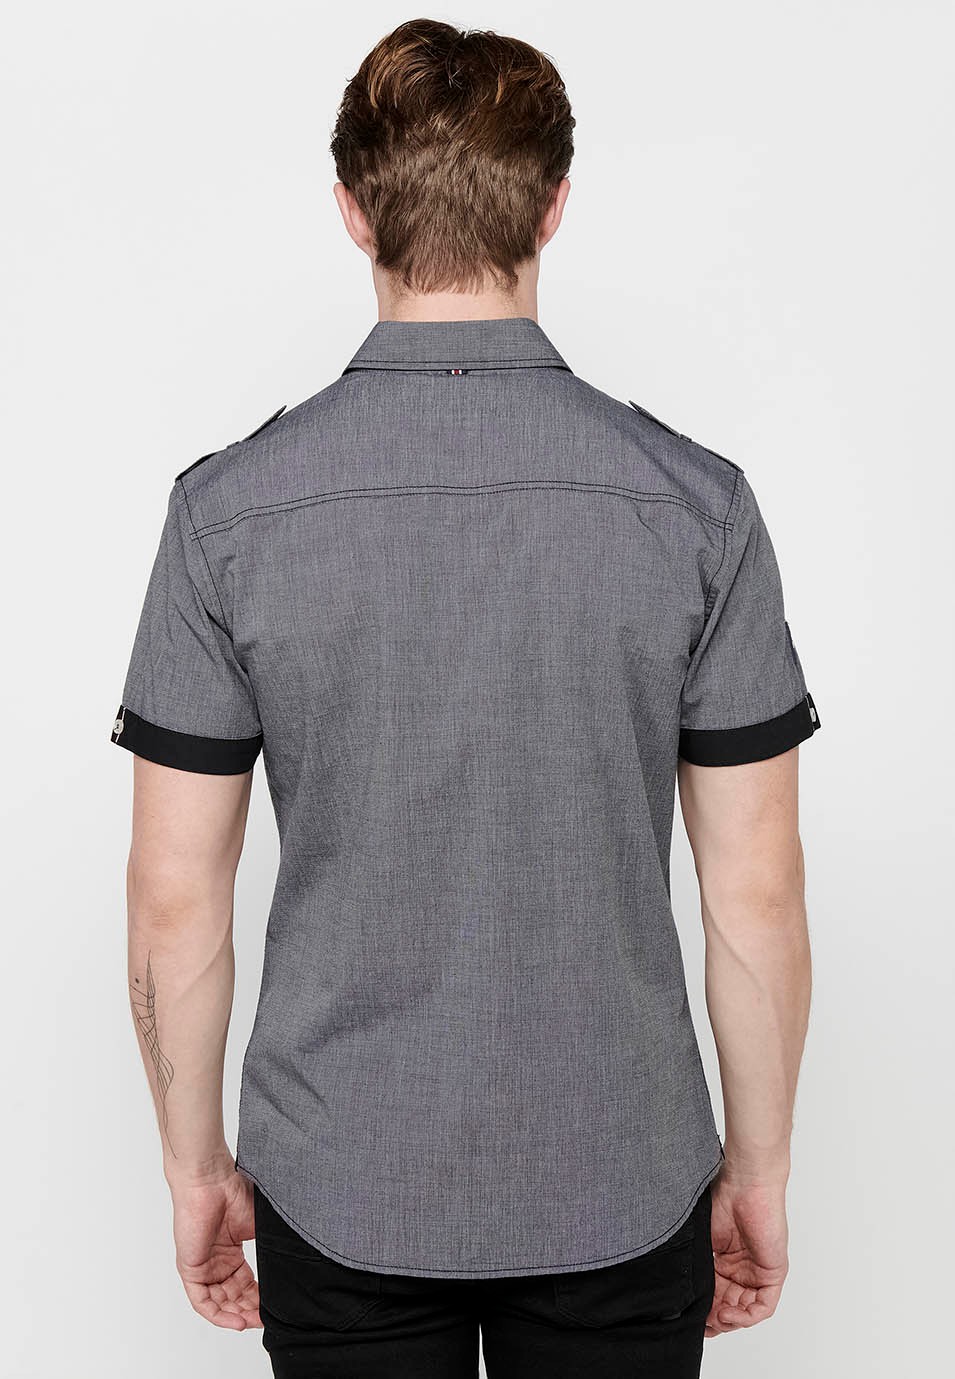 Camisa de algodón, manga corta, detalles hombro, color gris para hombre